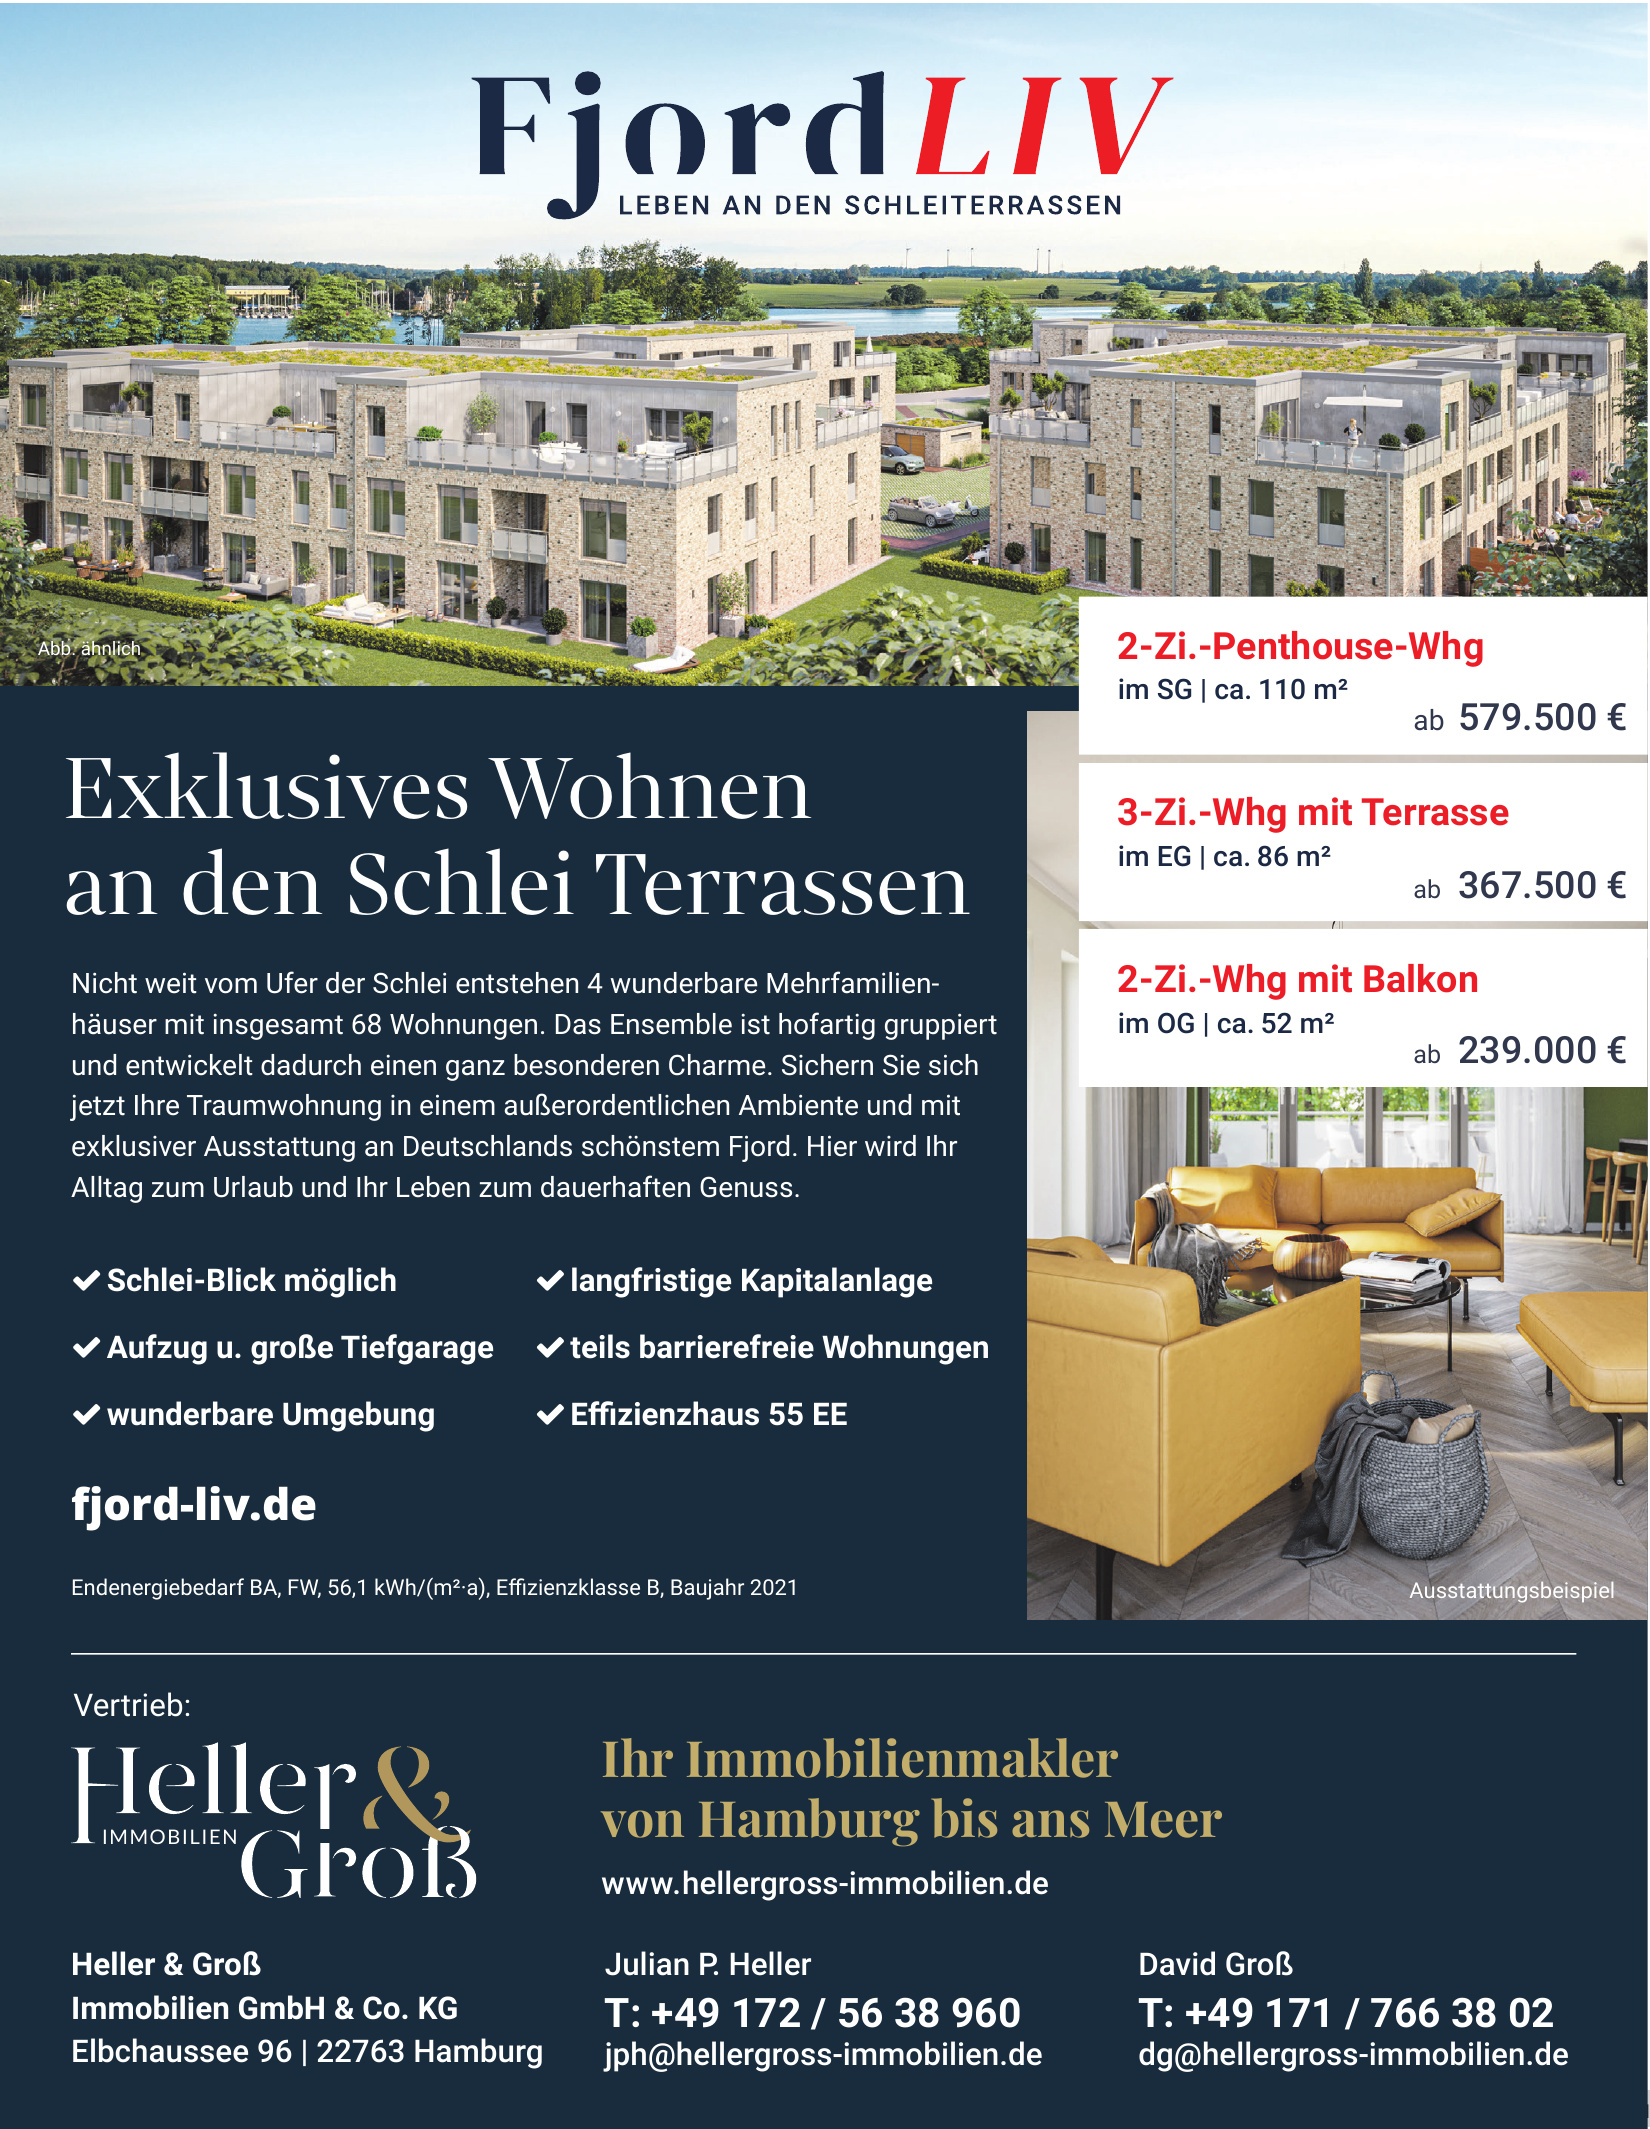 Heller & Groß Immobilien GmbH & Co. KG